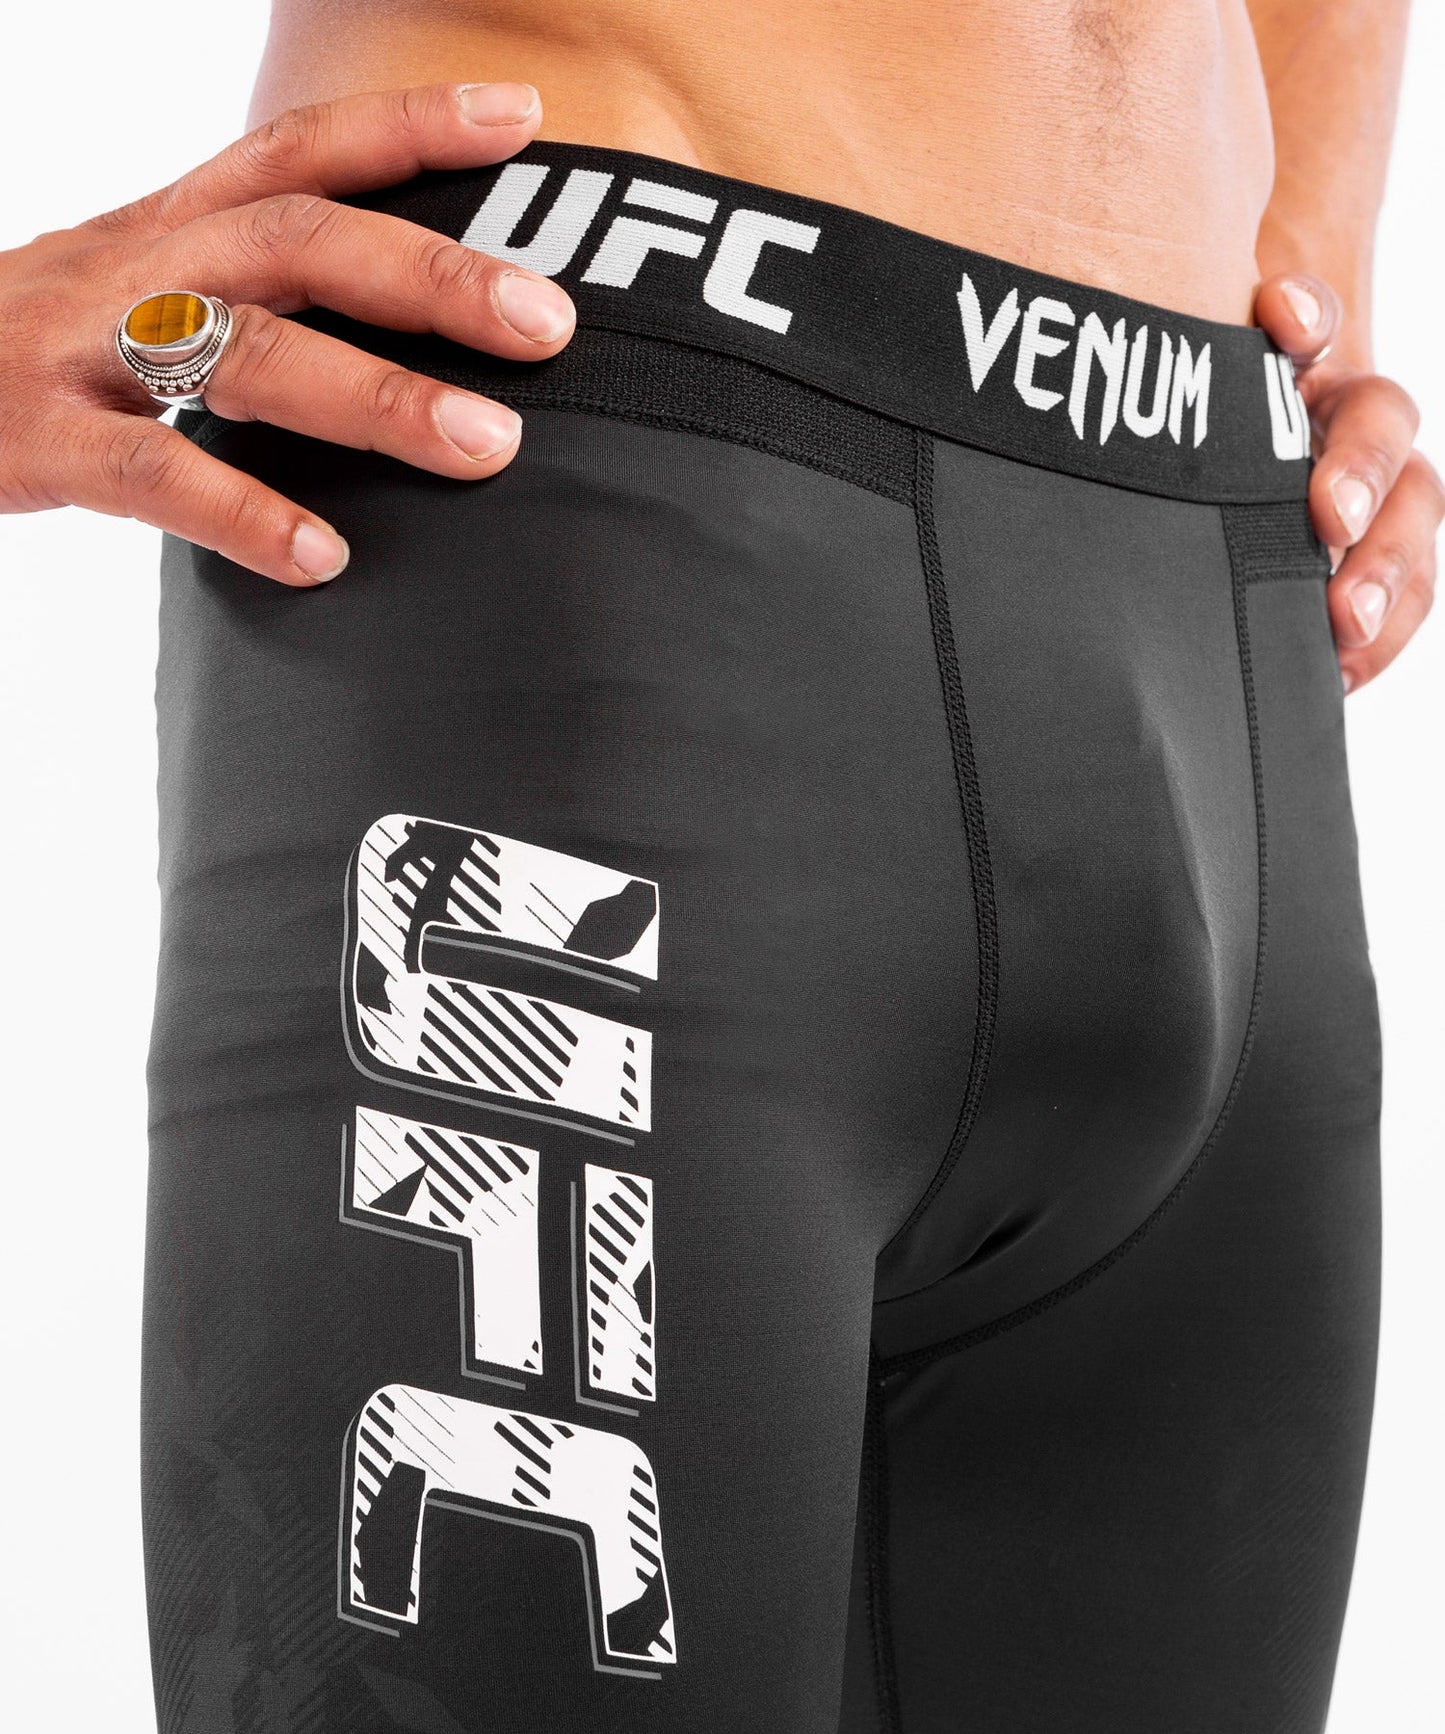 UFC Venum Authentic Fight Week Men's Performance Tight - Black